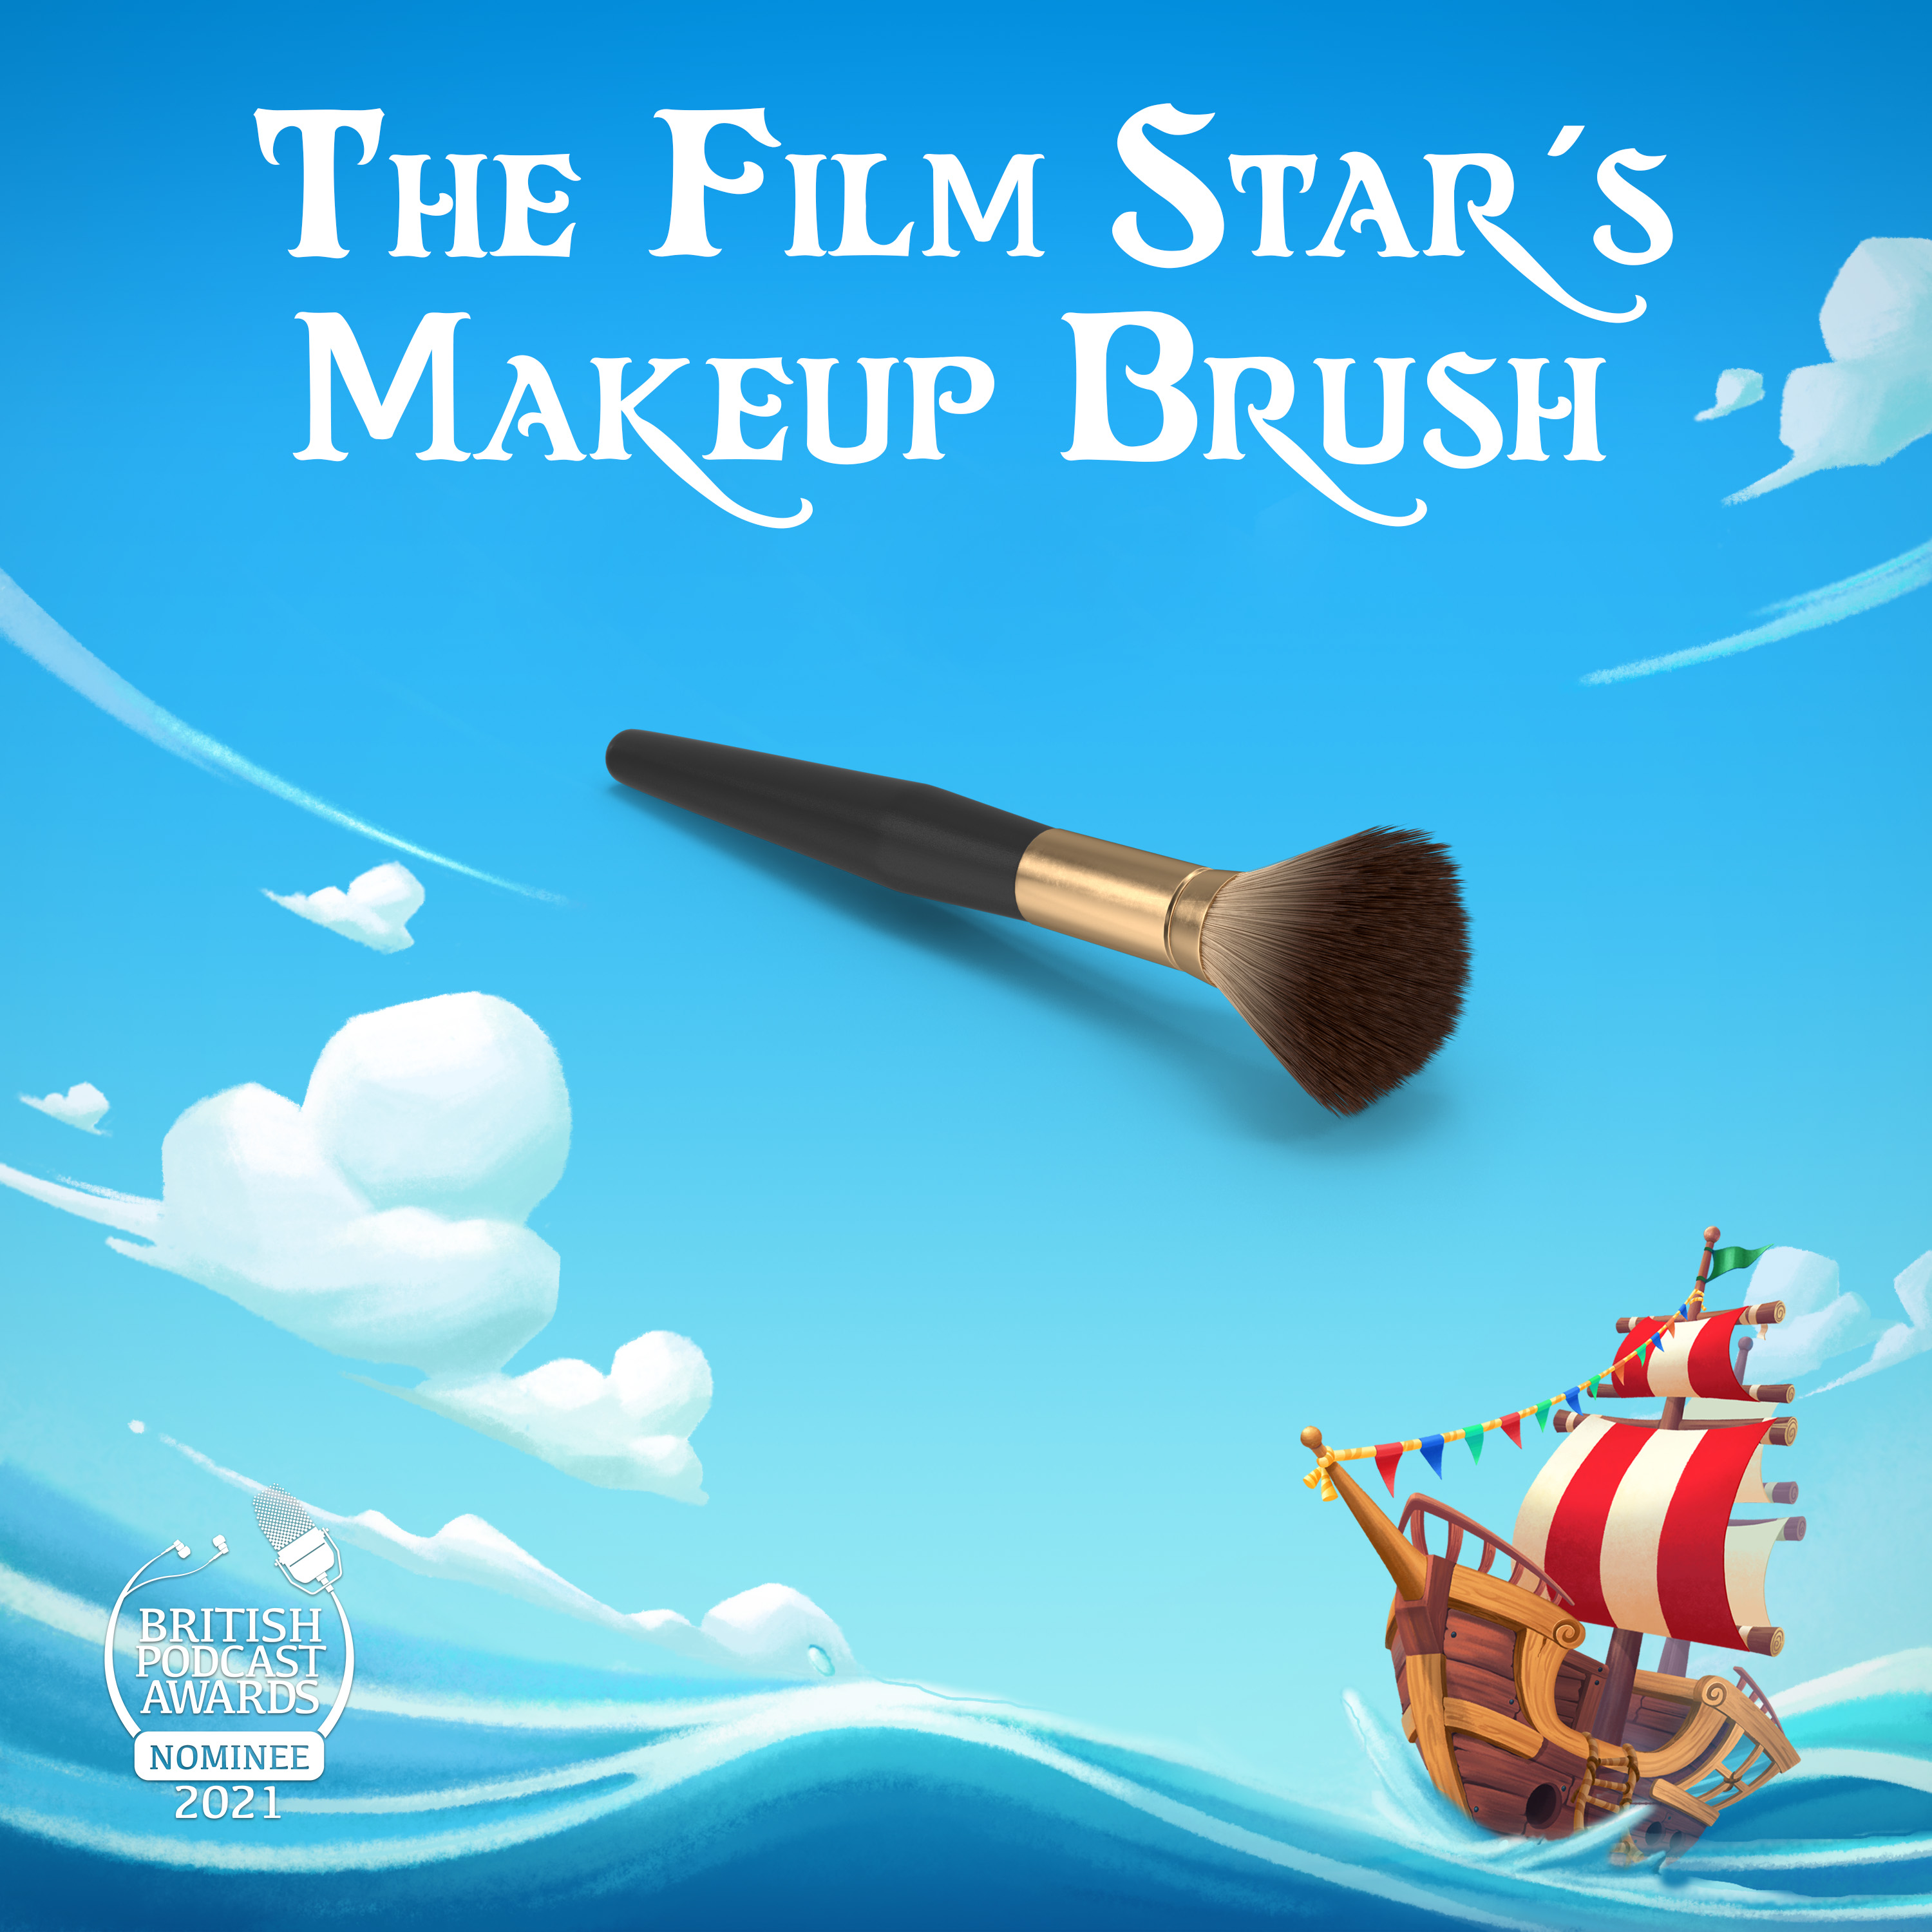 The Film Star’s Makeup Brush